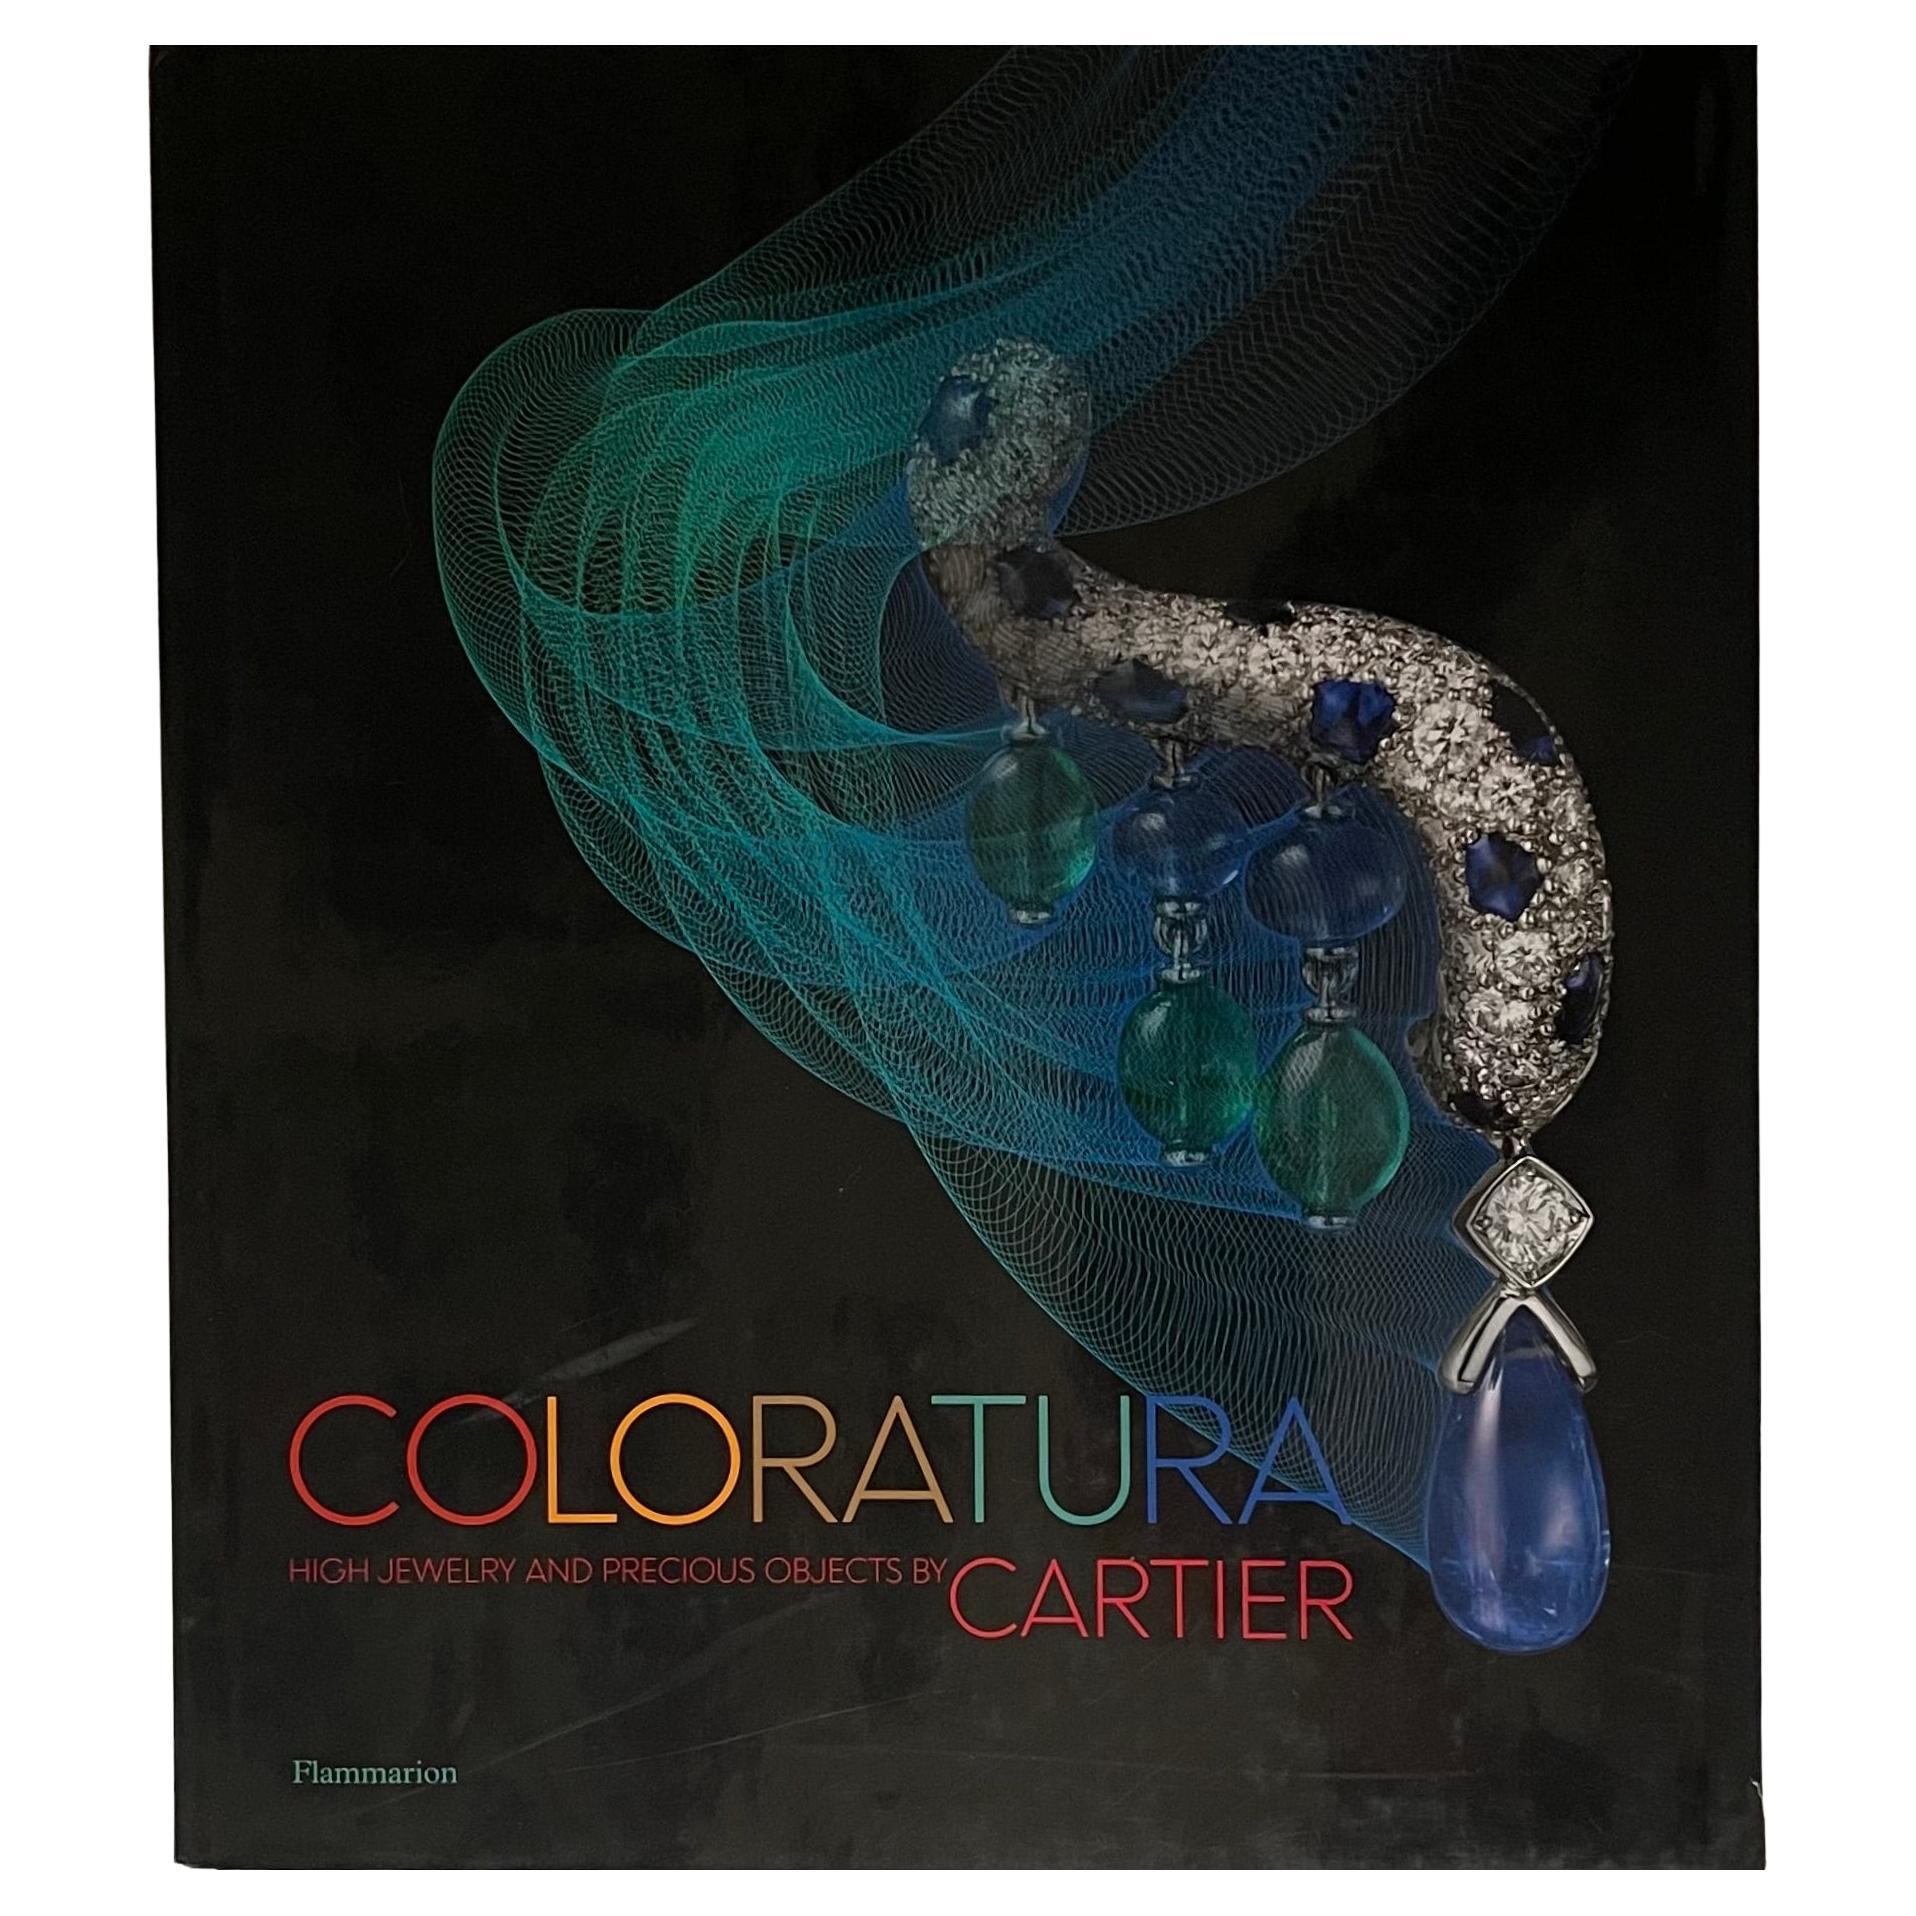 Cartier Coloratura 1st US ed. 2018